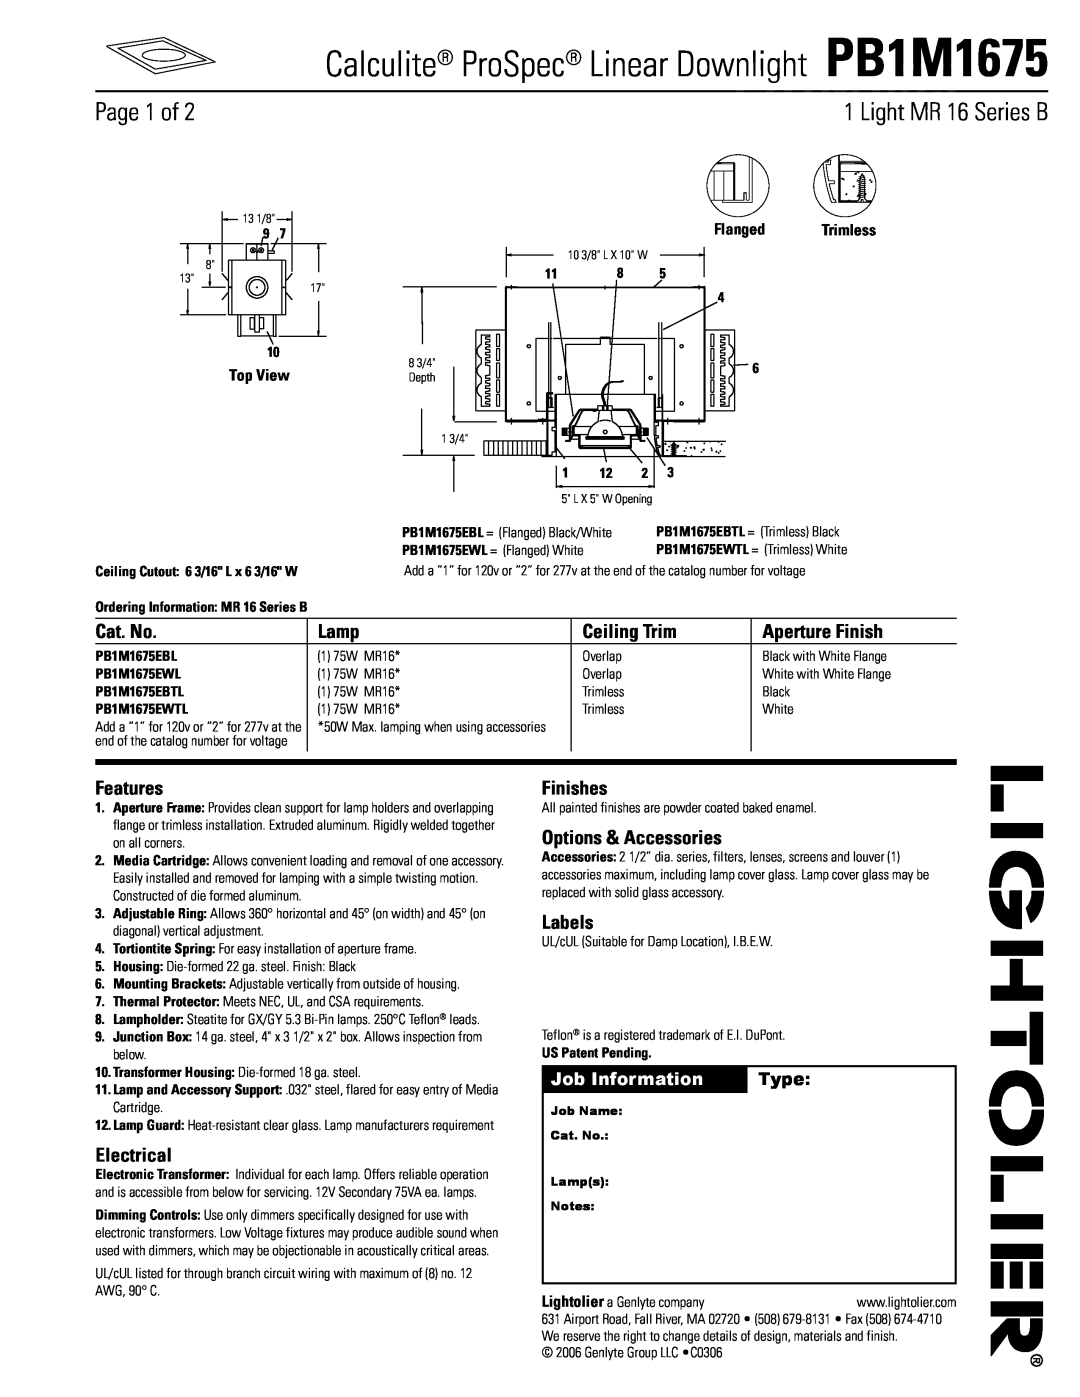 Lightolier manual Calculite ProSpec Linear Downlight PB1M1675, Page 1 of, Light MR03/0216 Series B, Cat. No, Lamp, Type 